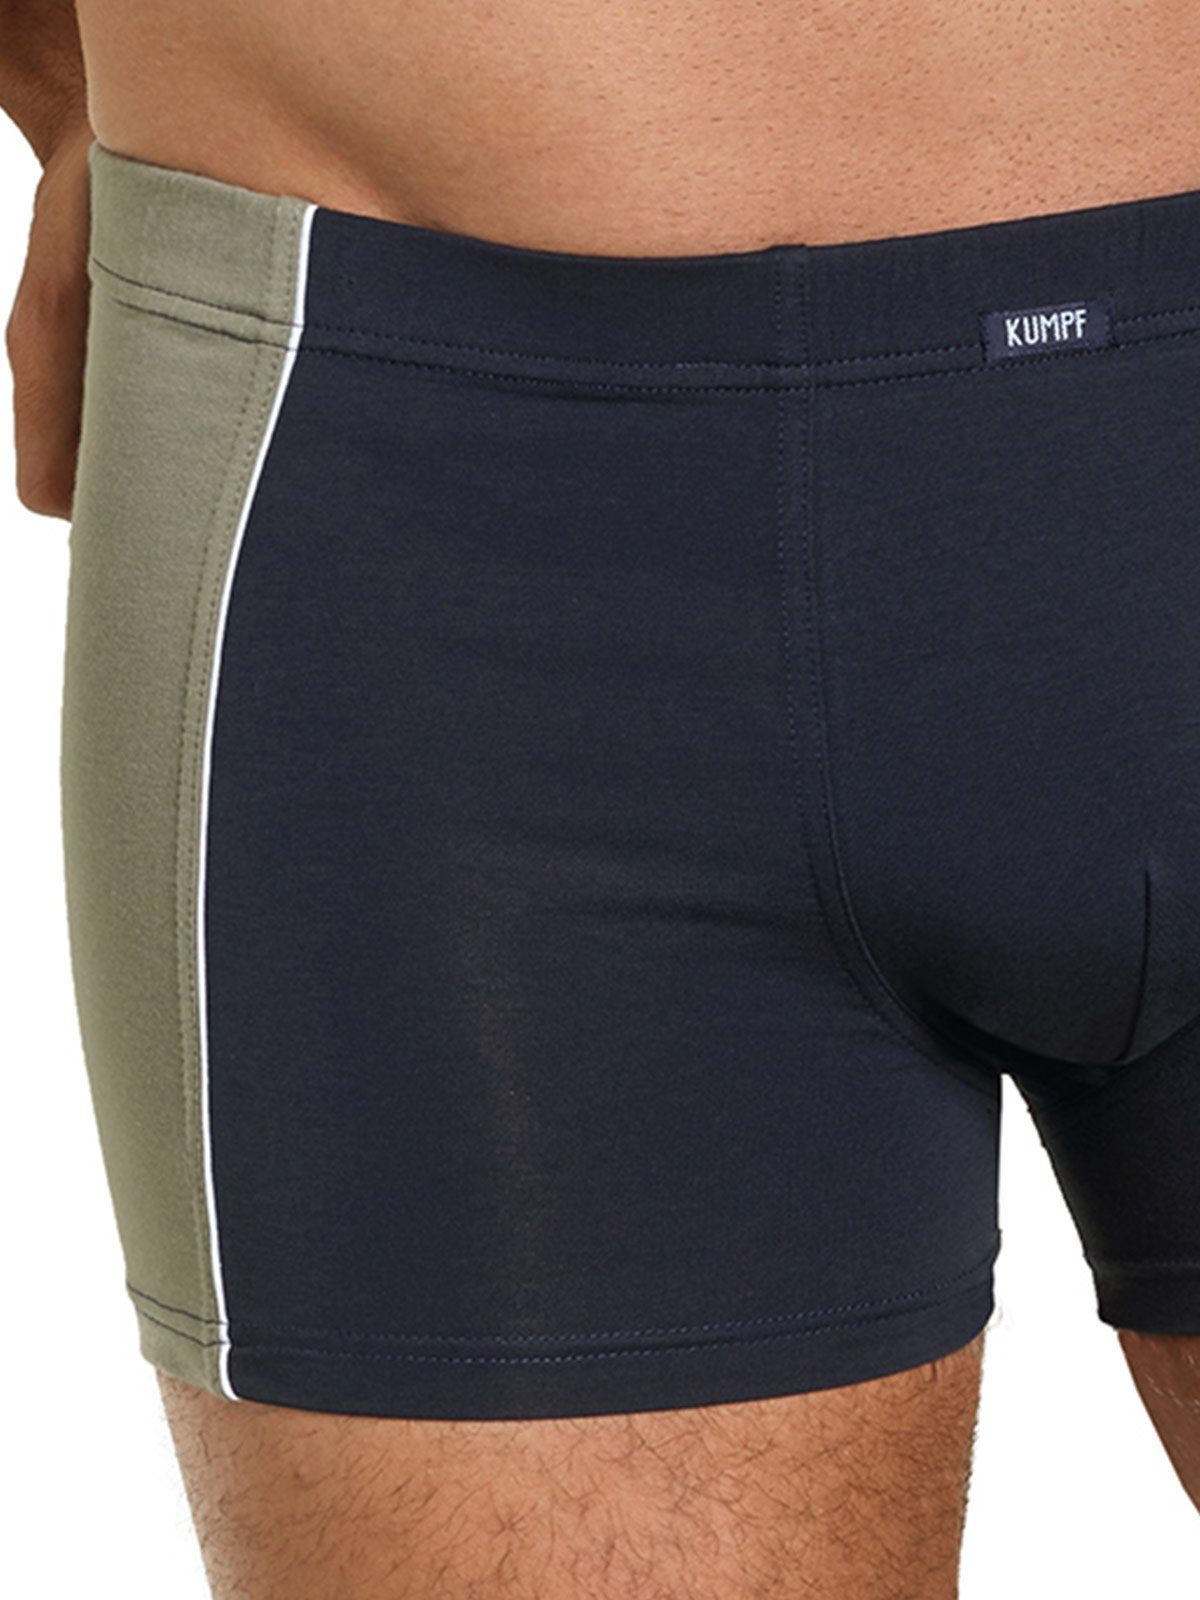 (Packung, hohe navy-olivgrün 3er Cotton 3-St) Herren Pants Pants Markenqualität Retro Pack KUMPF Bio